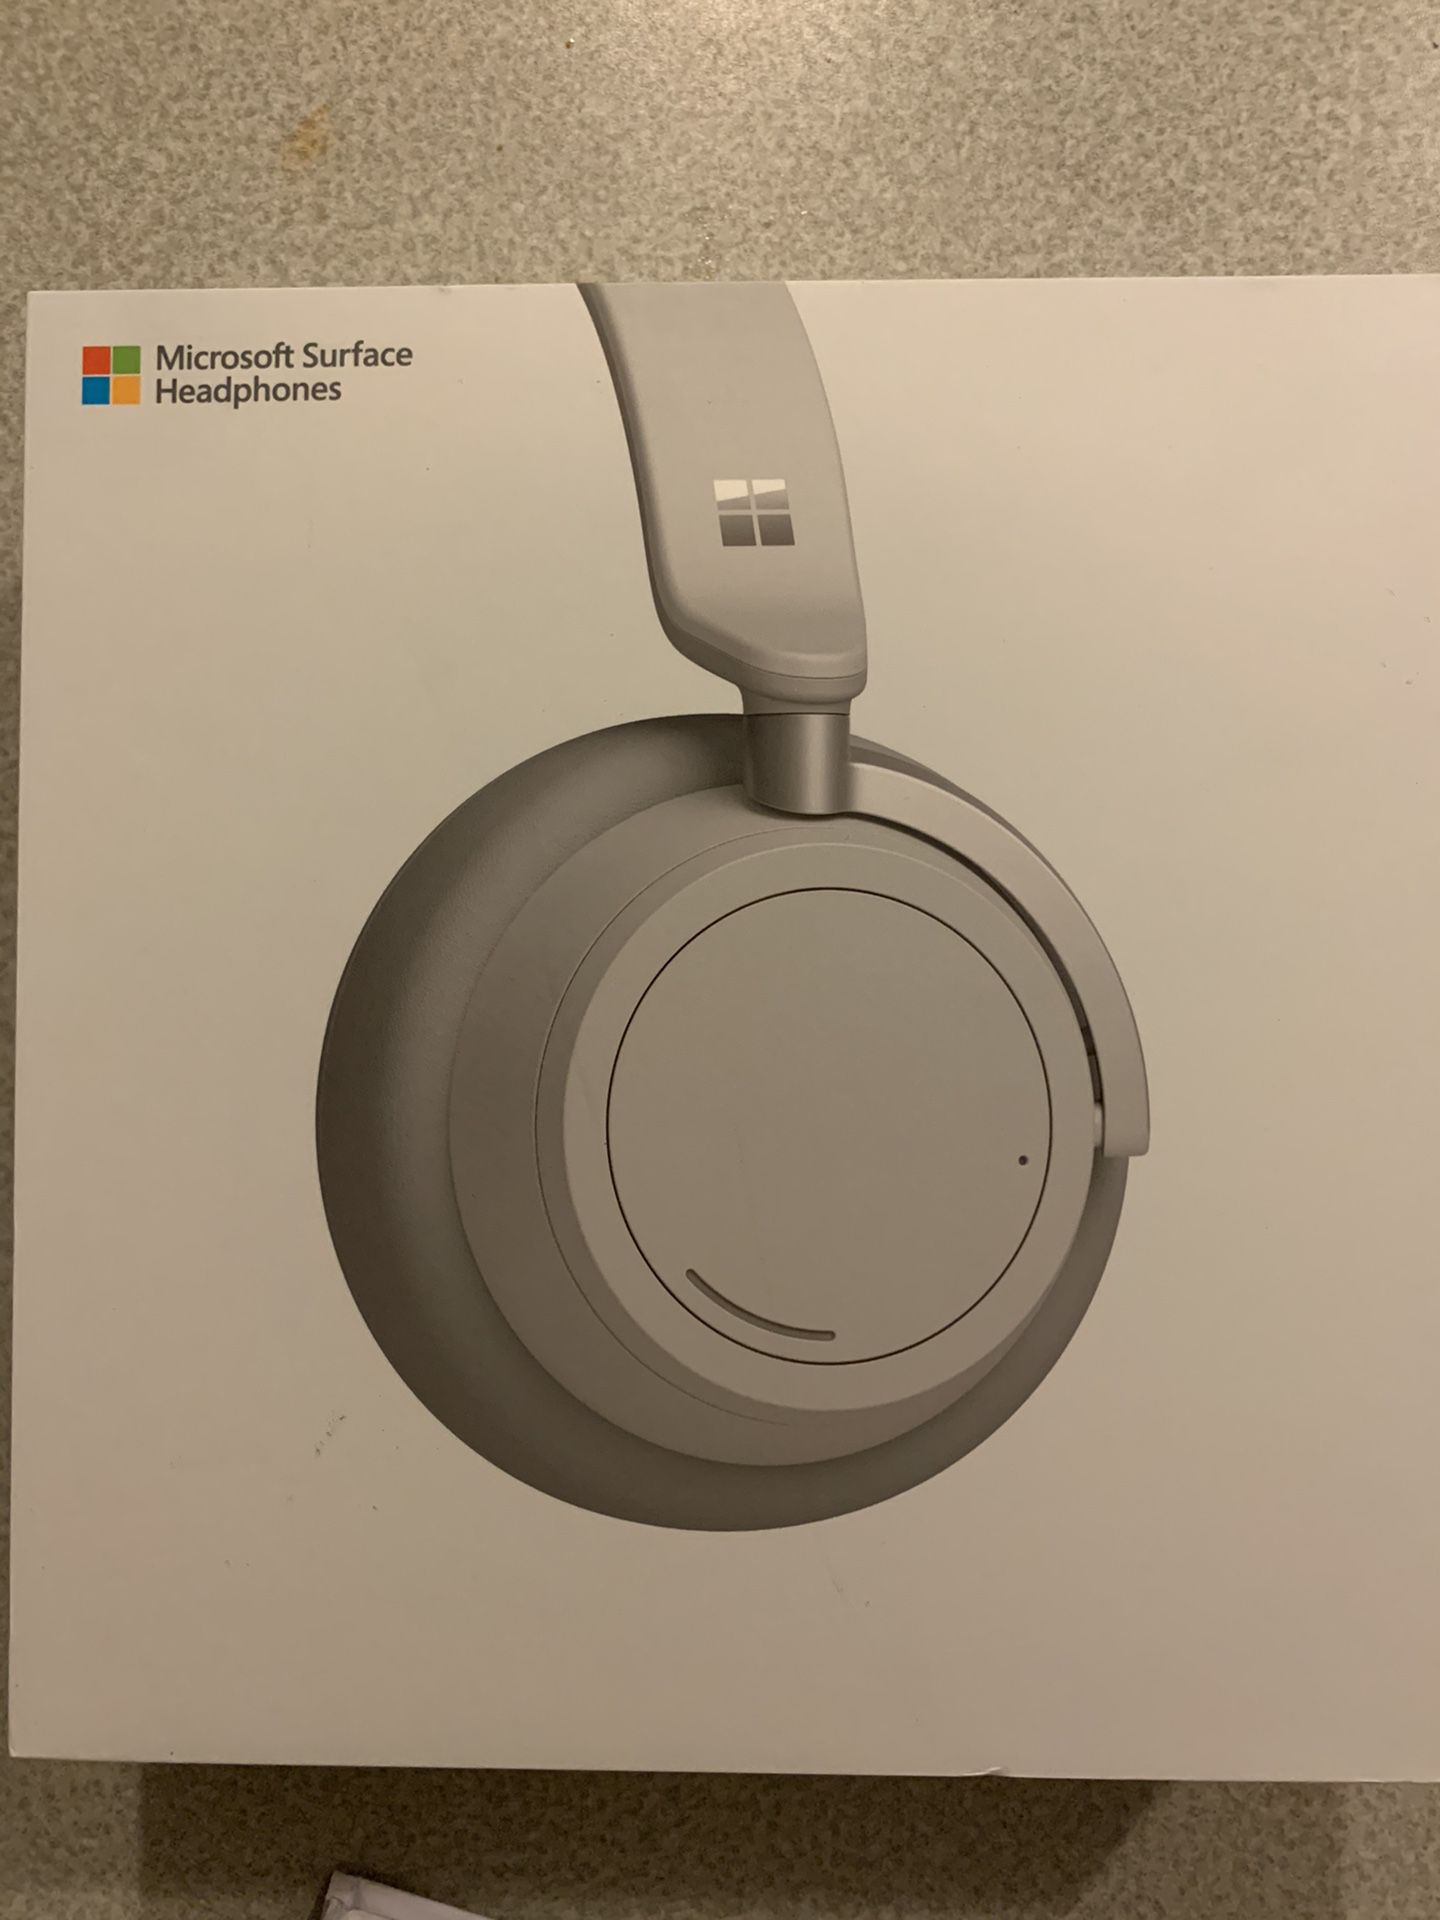 Microsoft surface headphones brand new unopened